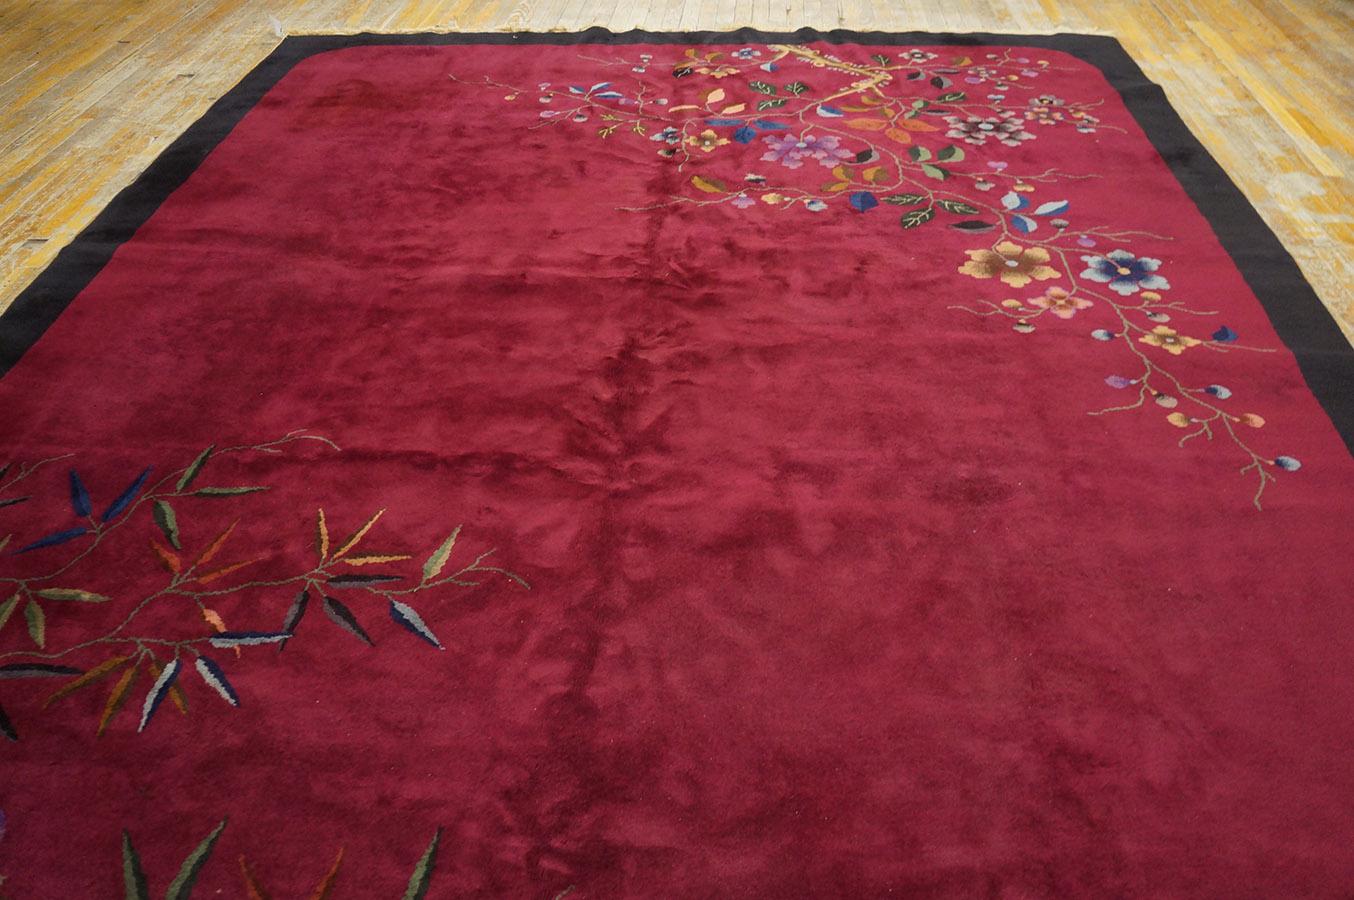 1920s Chinese Art Deco Carpet ( 8' 10'' x 11' 6'' - 270 x 350 cm ) For Sale 6